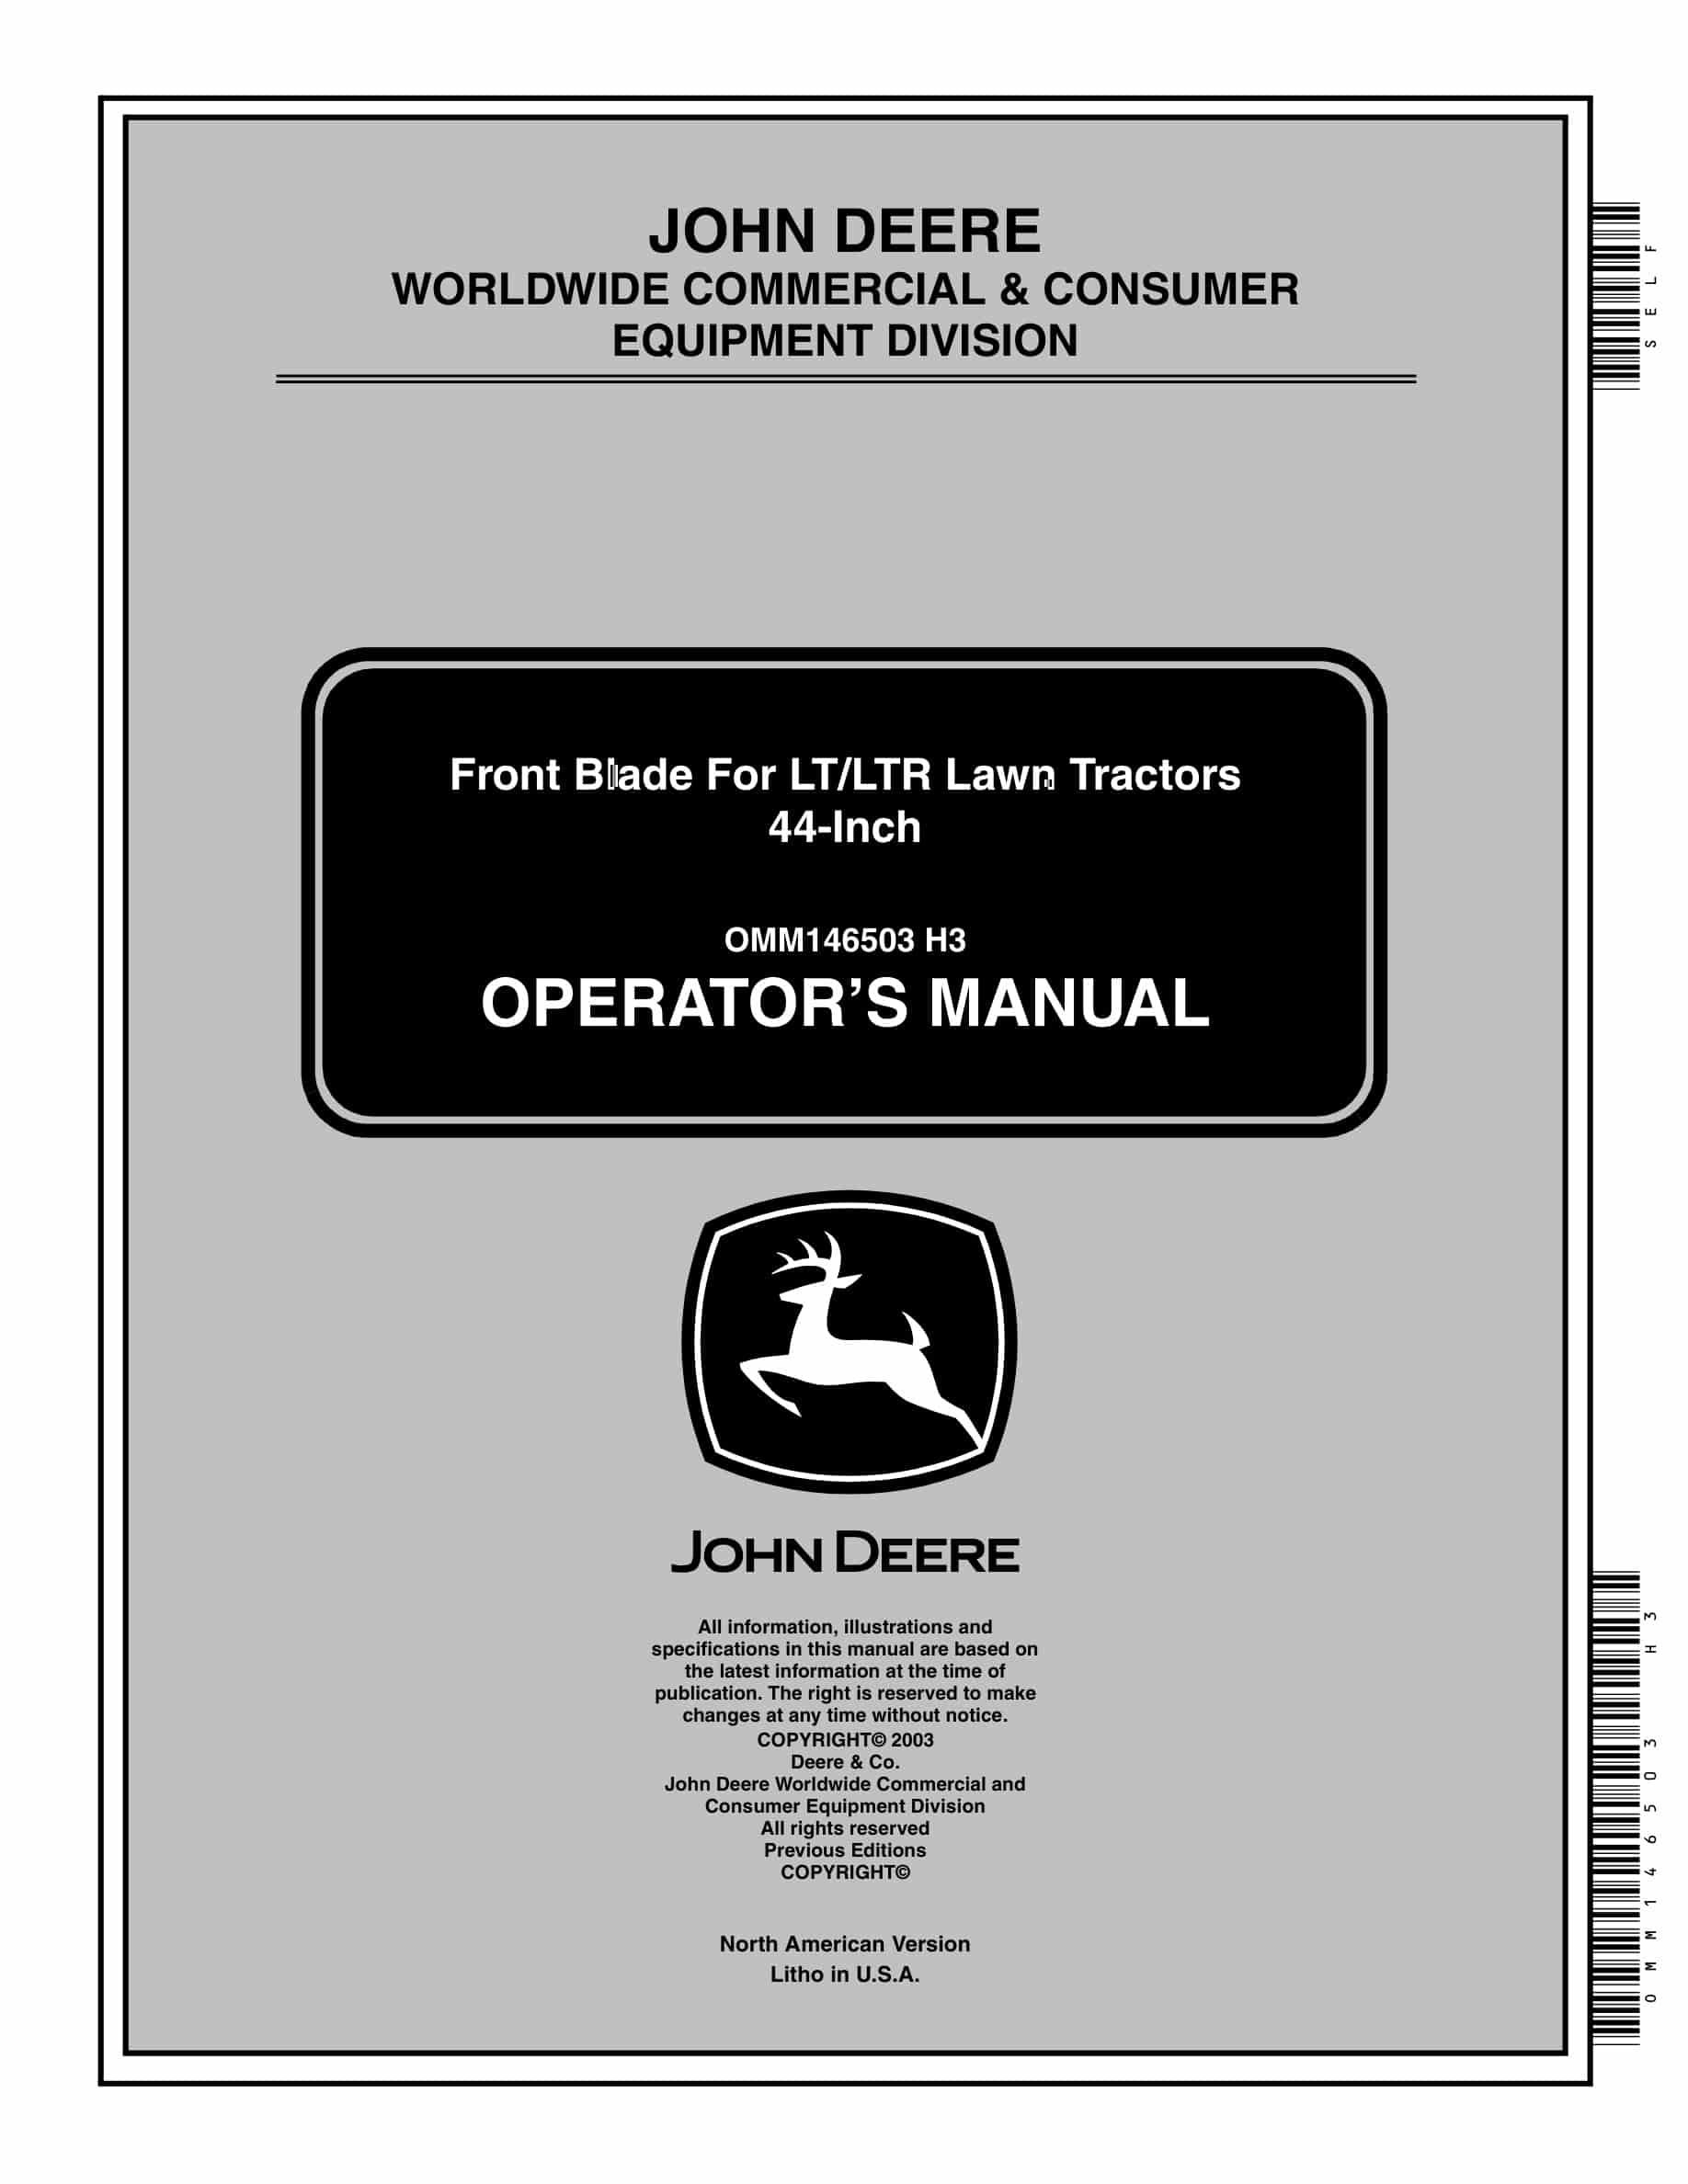 John Deere Front Blade For Lt Ltr 44-inch Lawn Tractors Operator Manuals OMM146503-1